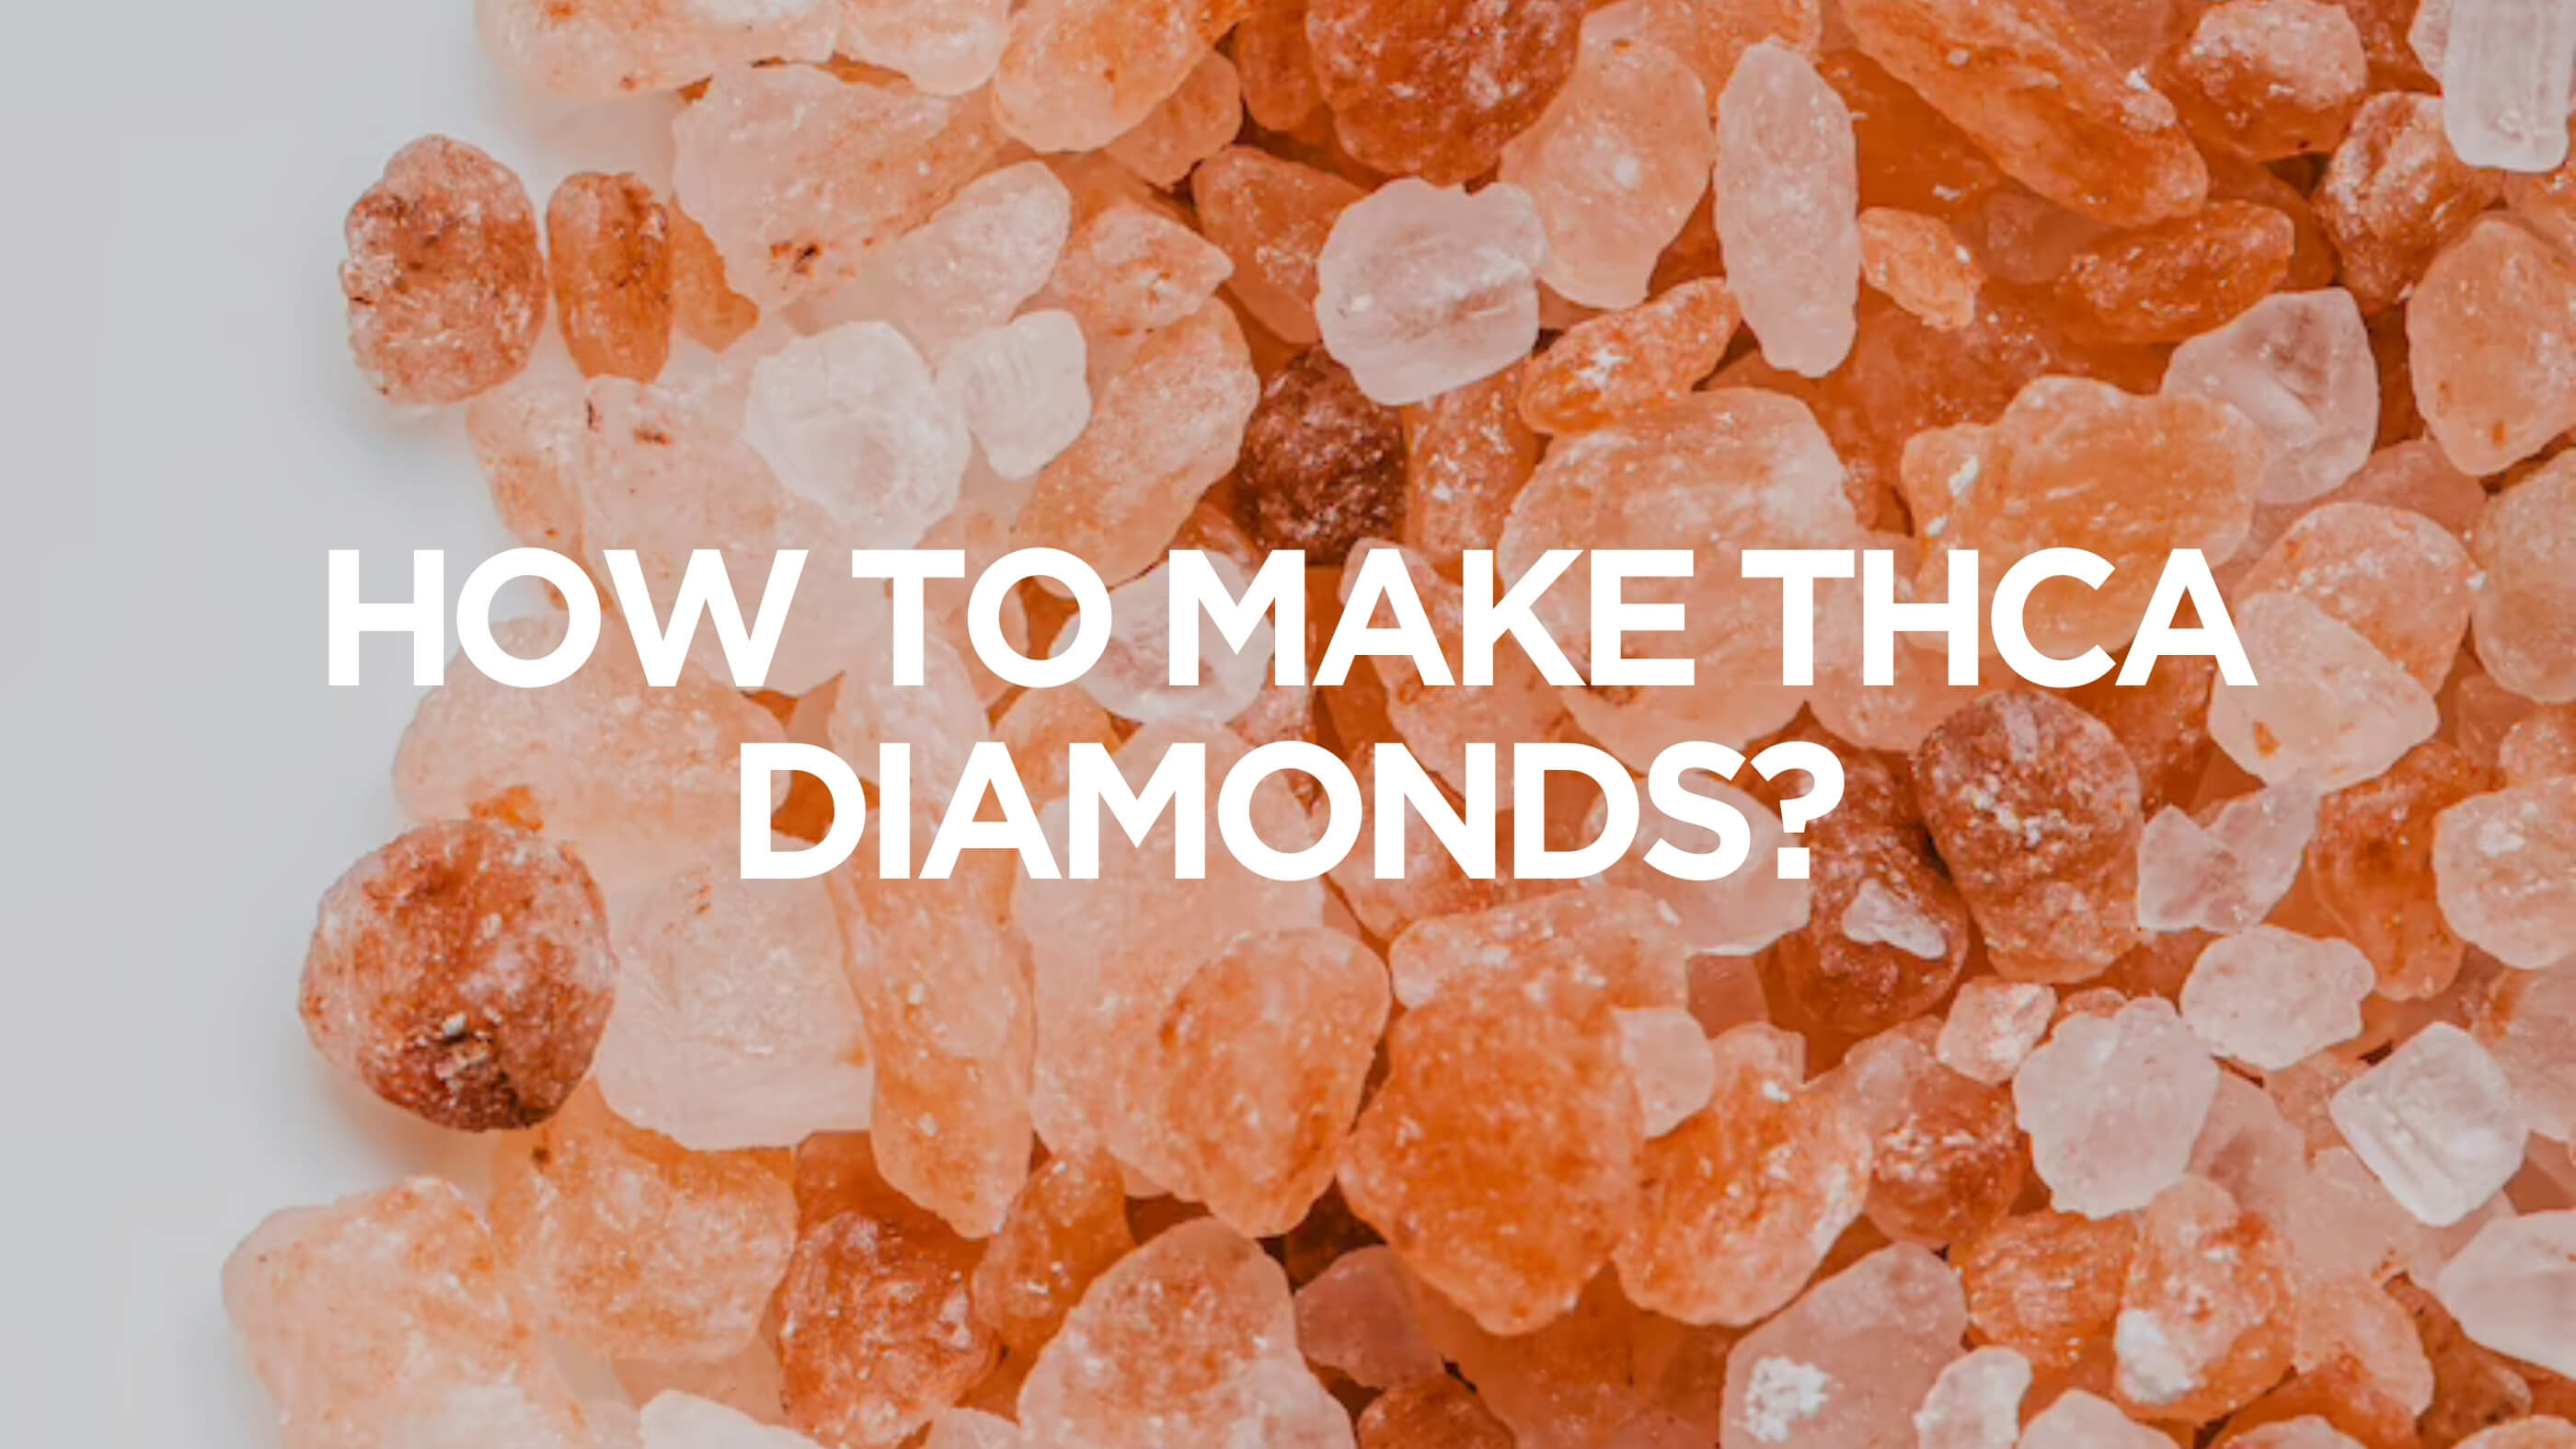 A Guide To Cannabis Diamonds